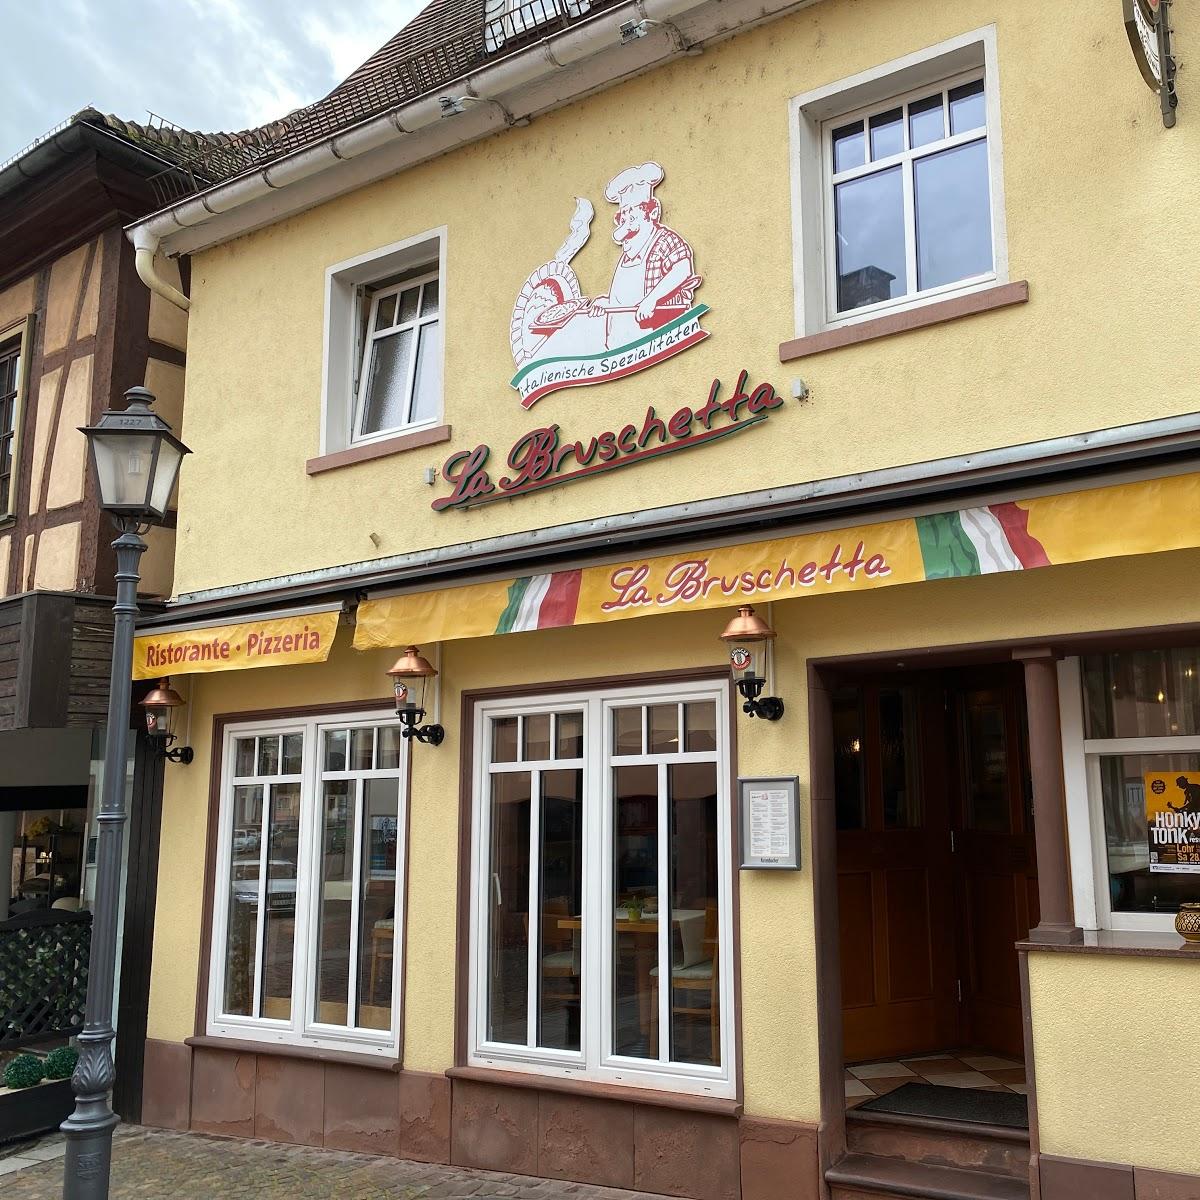 Restaurant "La Bruschetta" in Frankfurt am Main